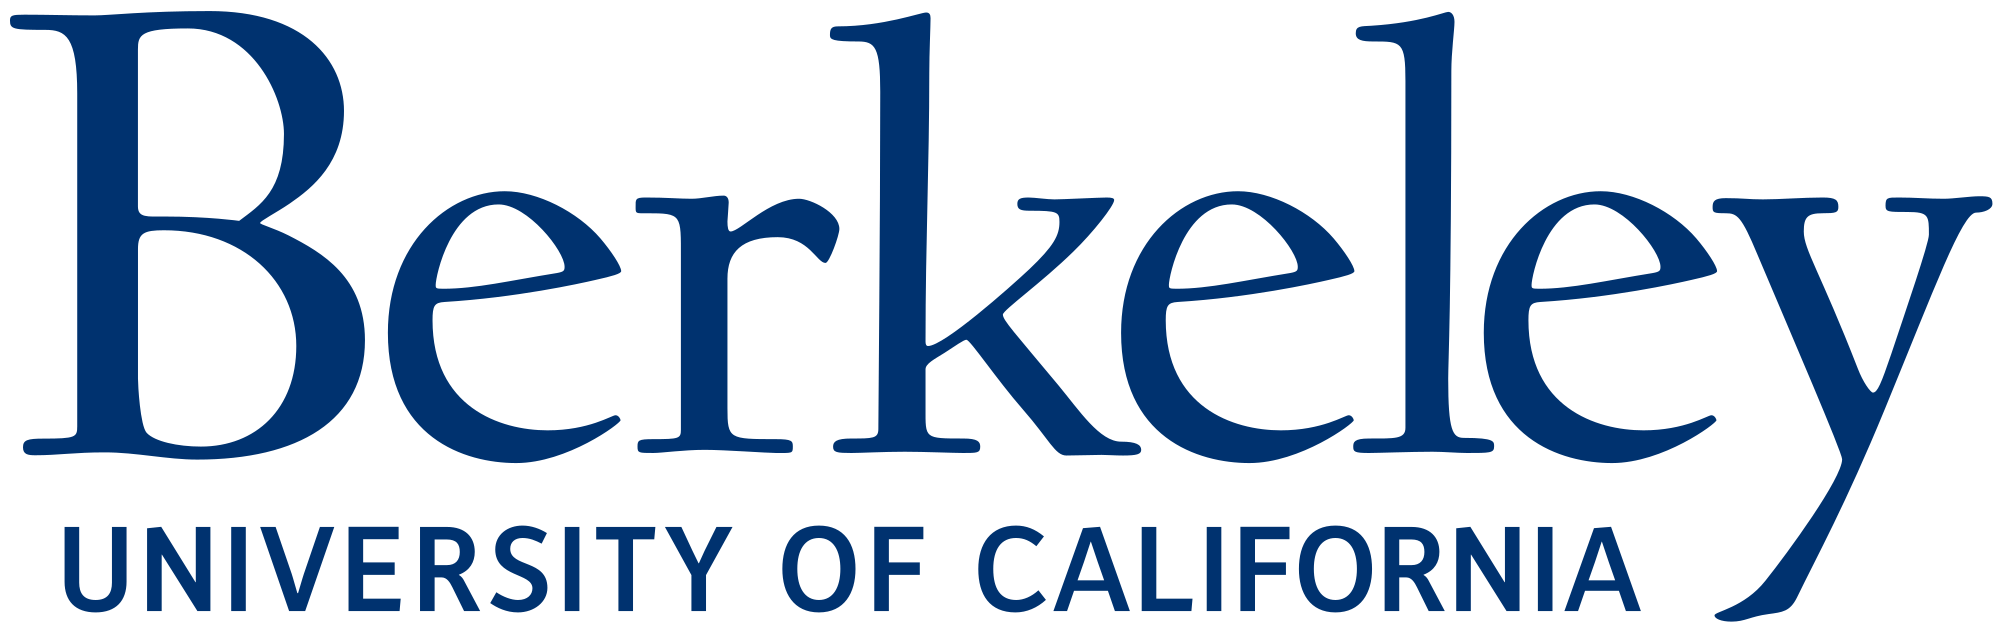 2000px-University_of_California,_Berkeley_logo.svg.png